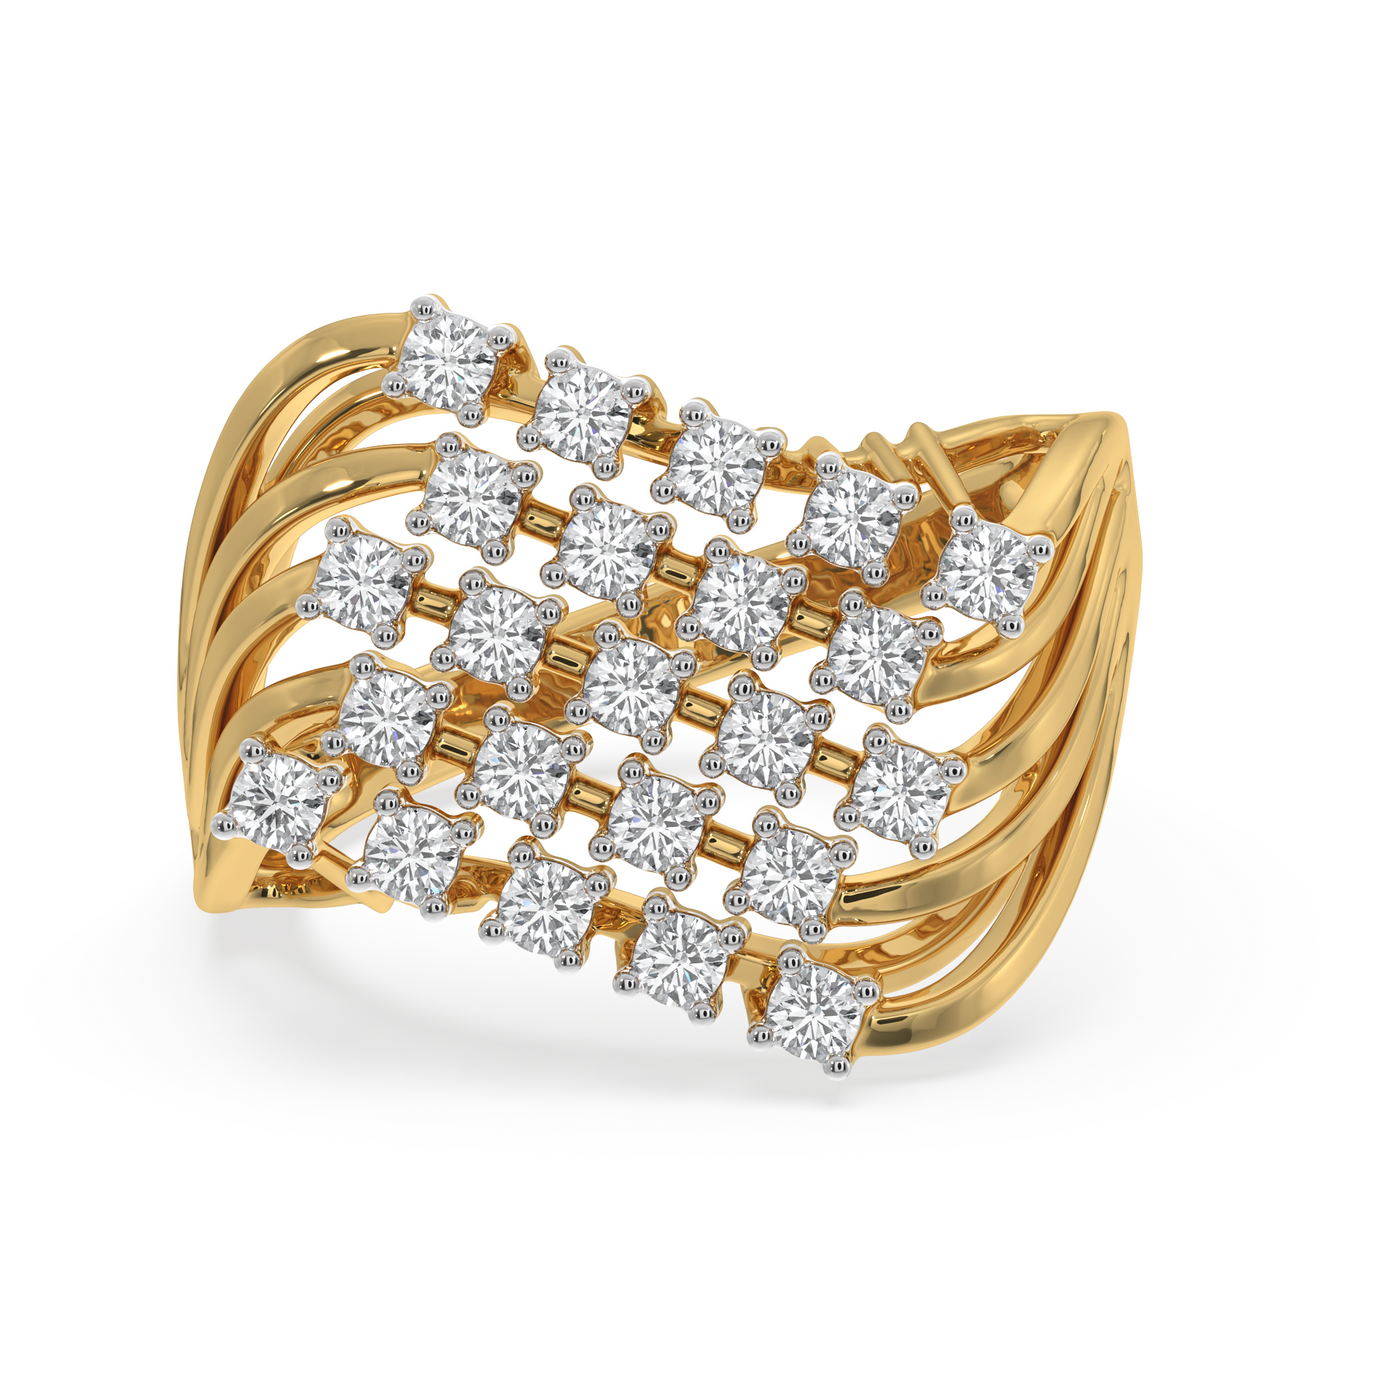 SY Women's Ring in Gold, Solitary Sparkler